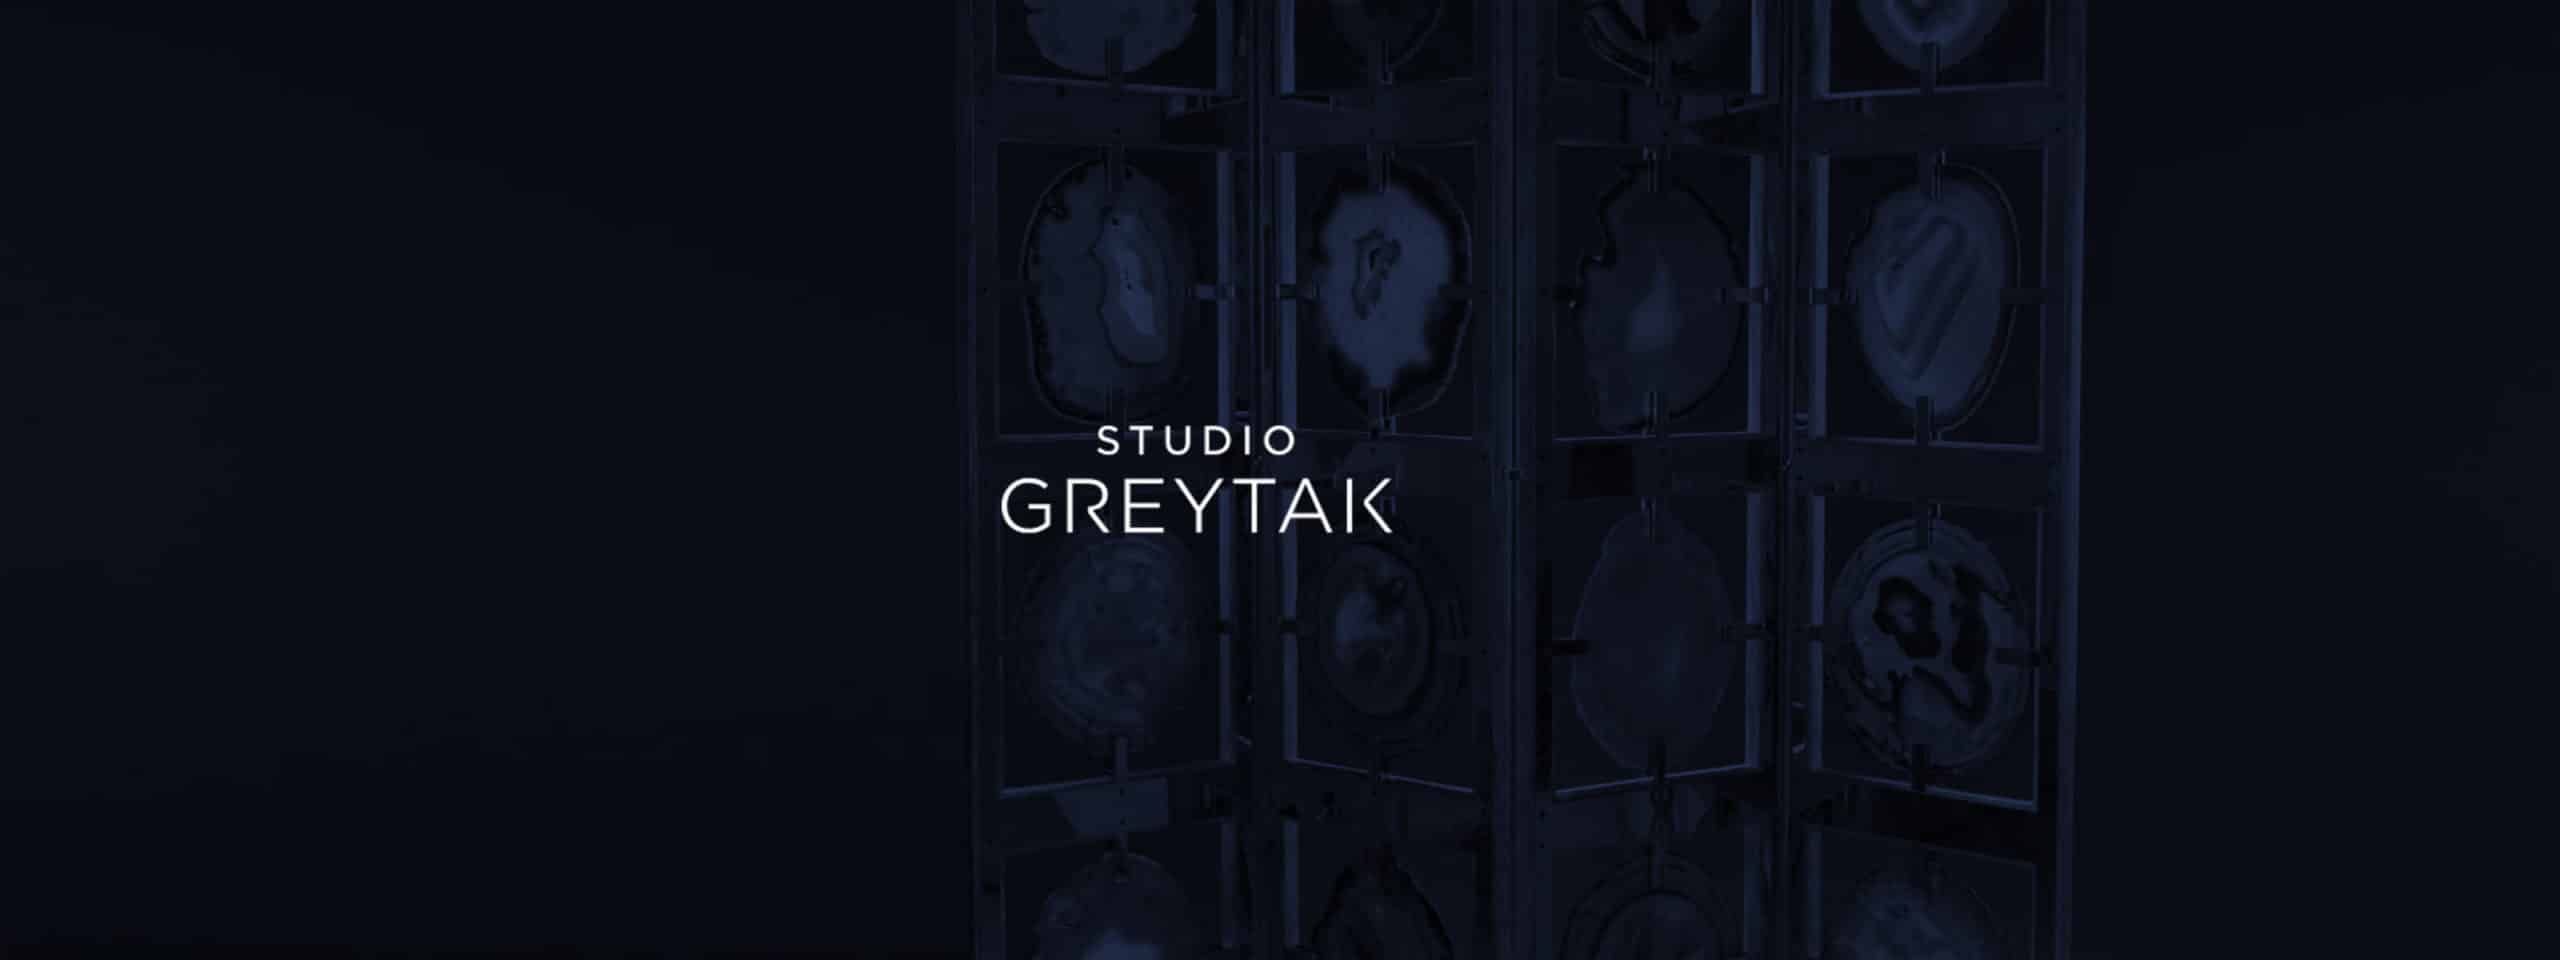 Studio Greytak logo and hero